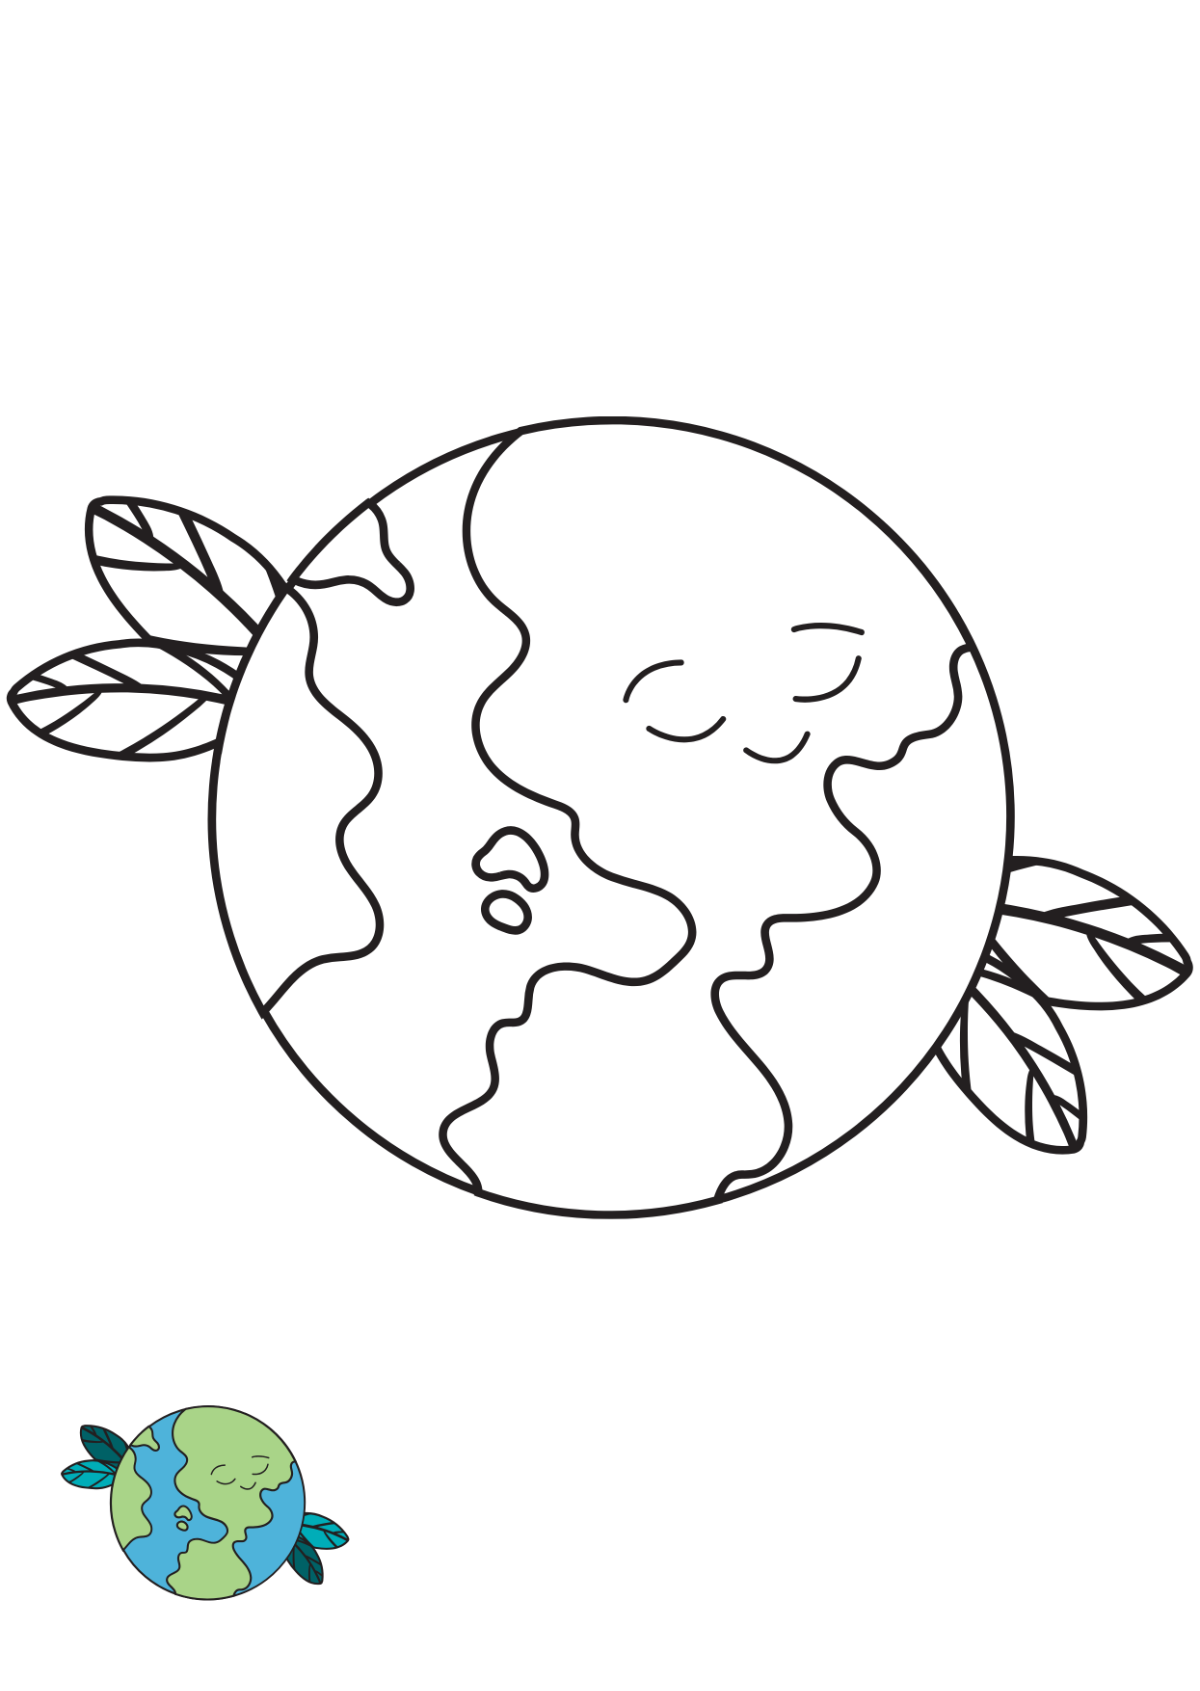 Preschool Earth Day Coloring Page